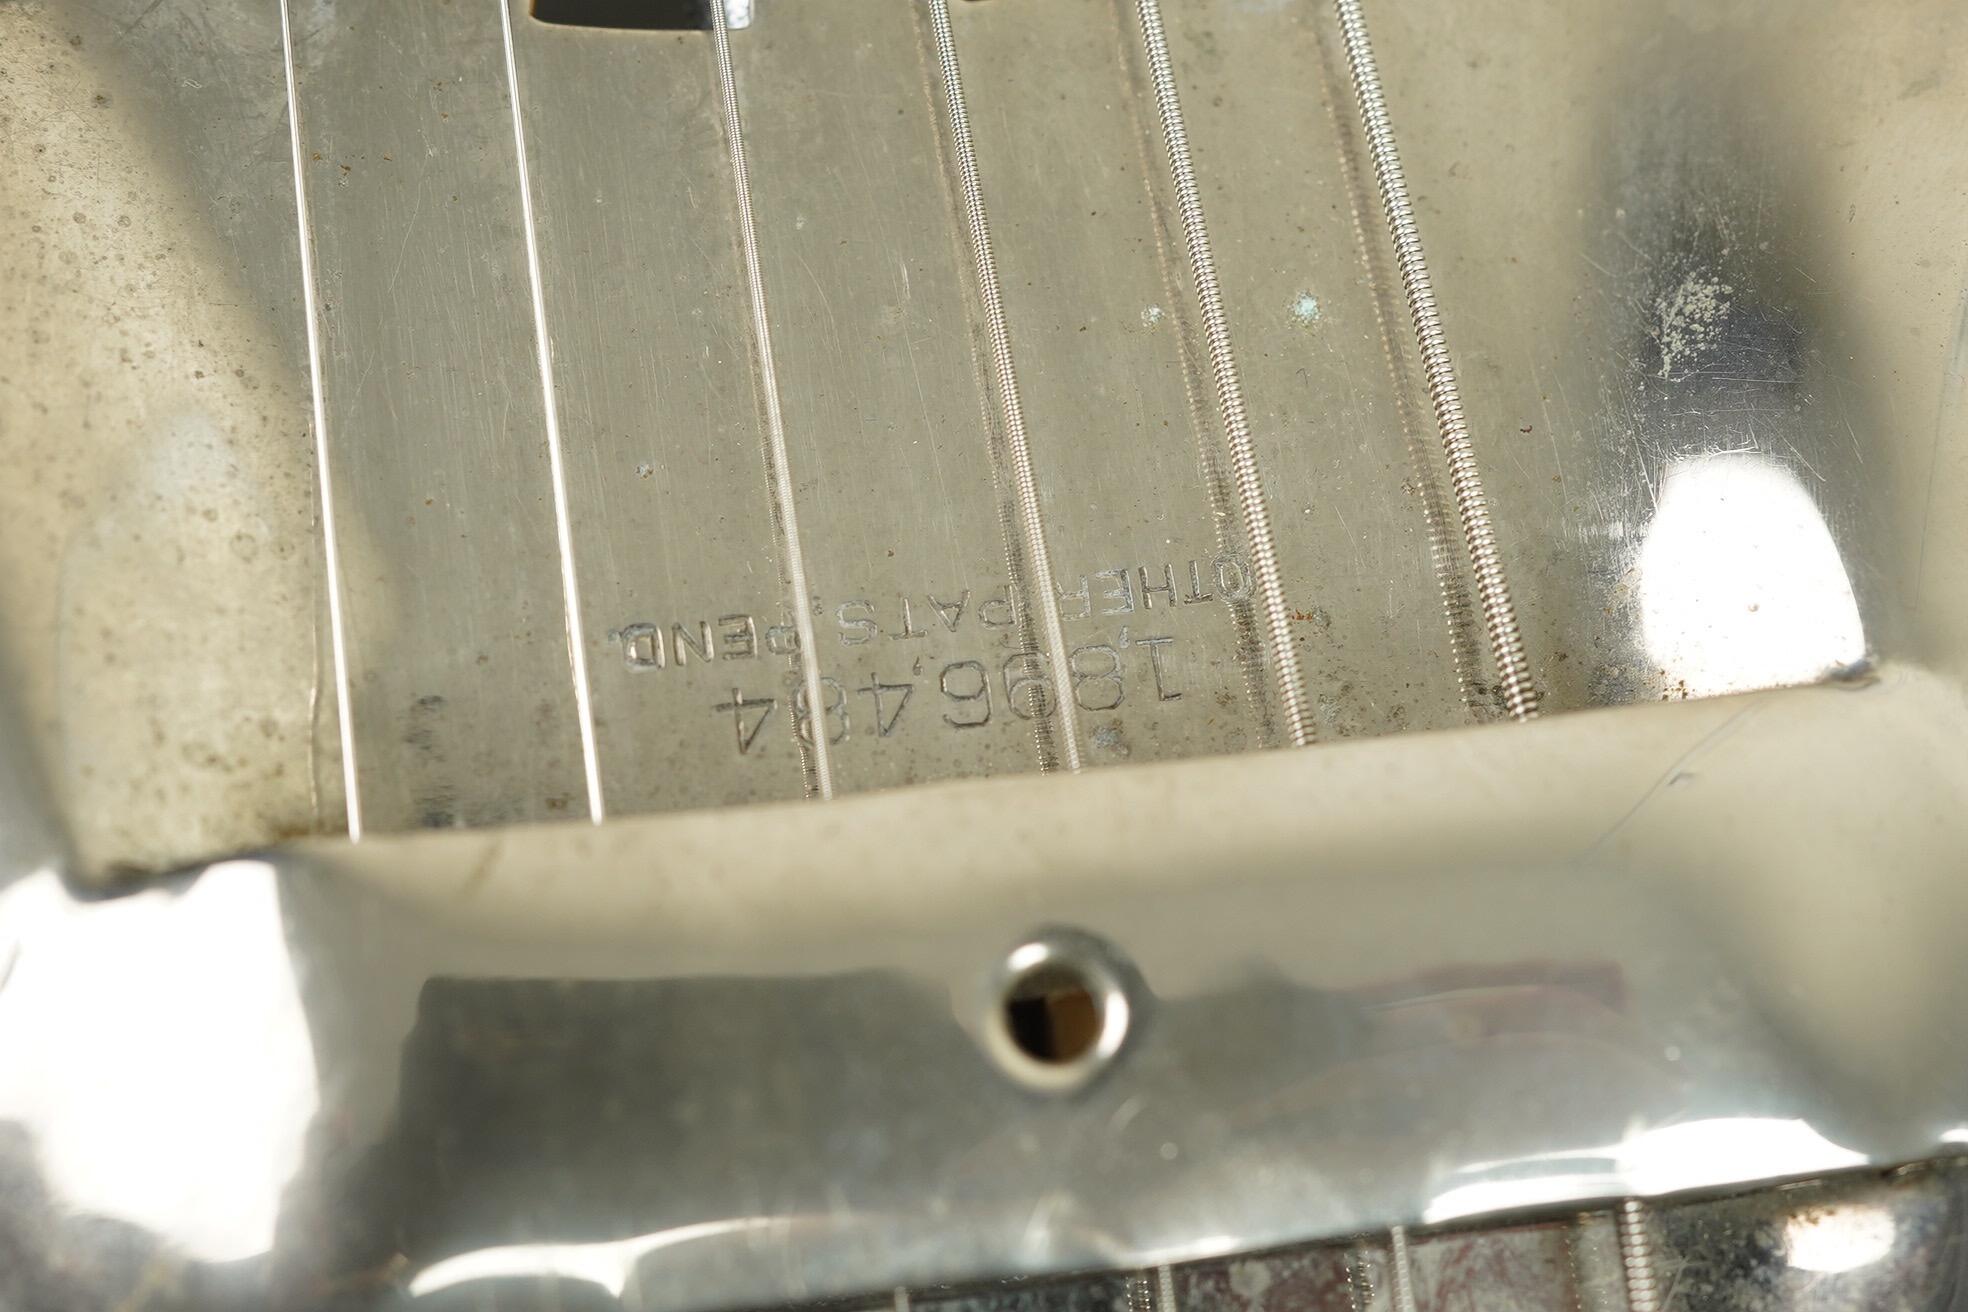 1930s Regal Model 27, The Michigan branded resonator